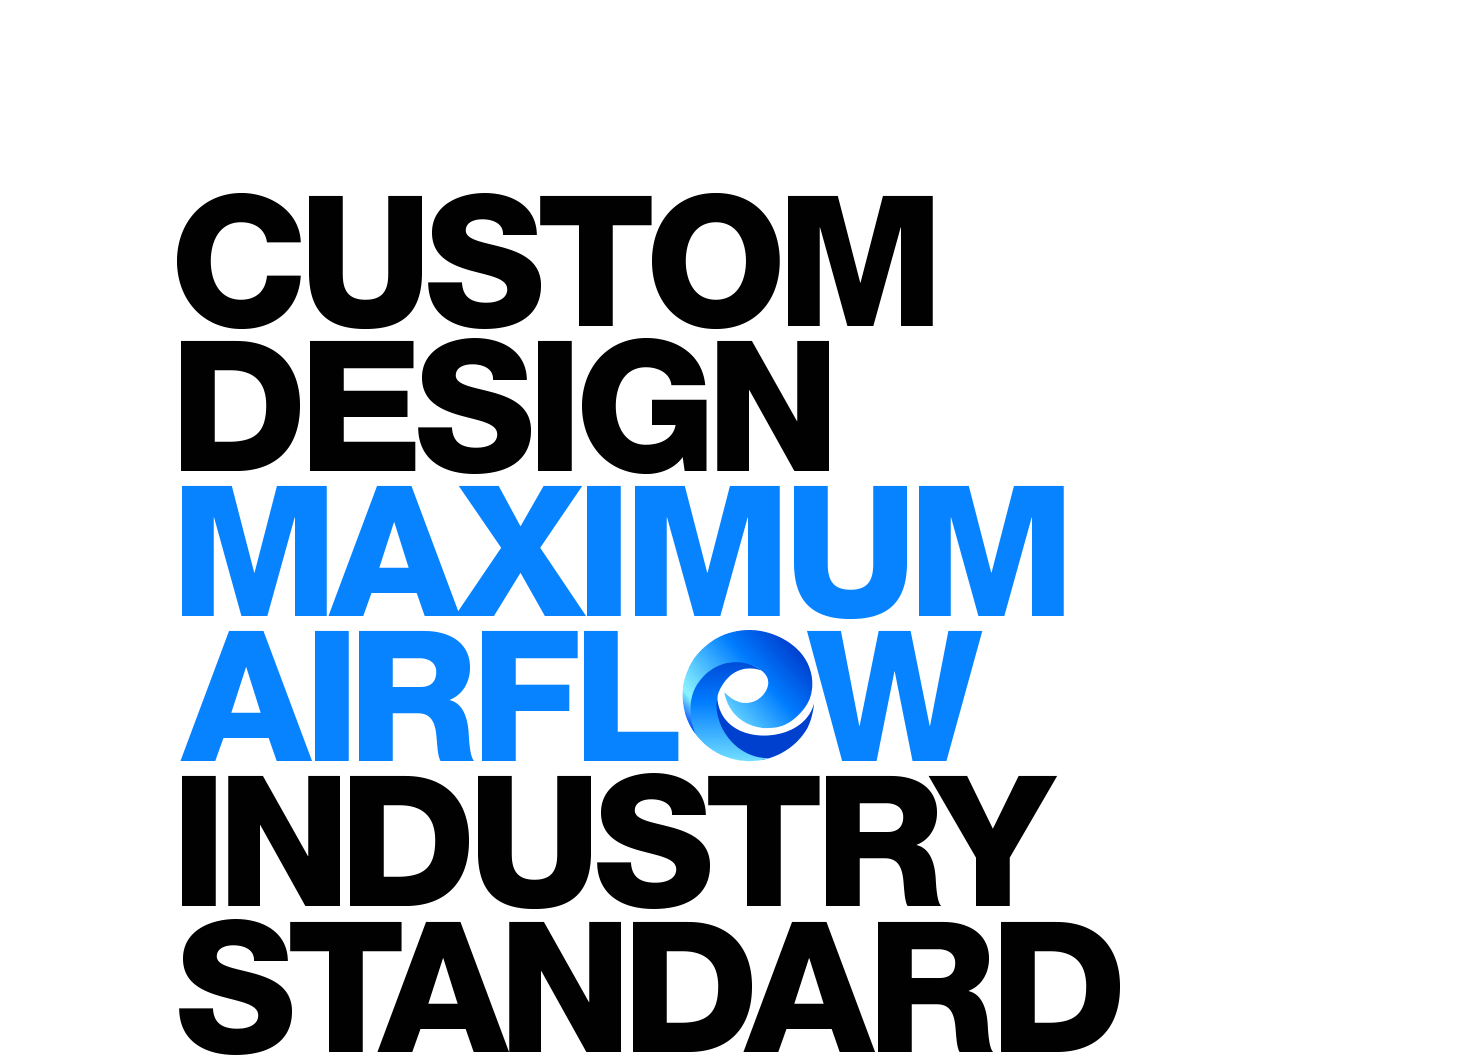 Buy Air Vents With SafeAir. Custom Design. Maximum Airflow.